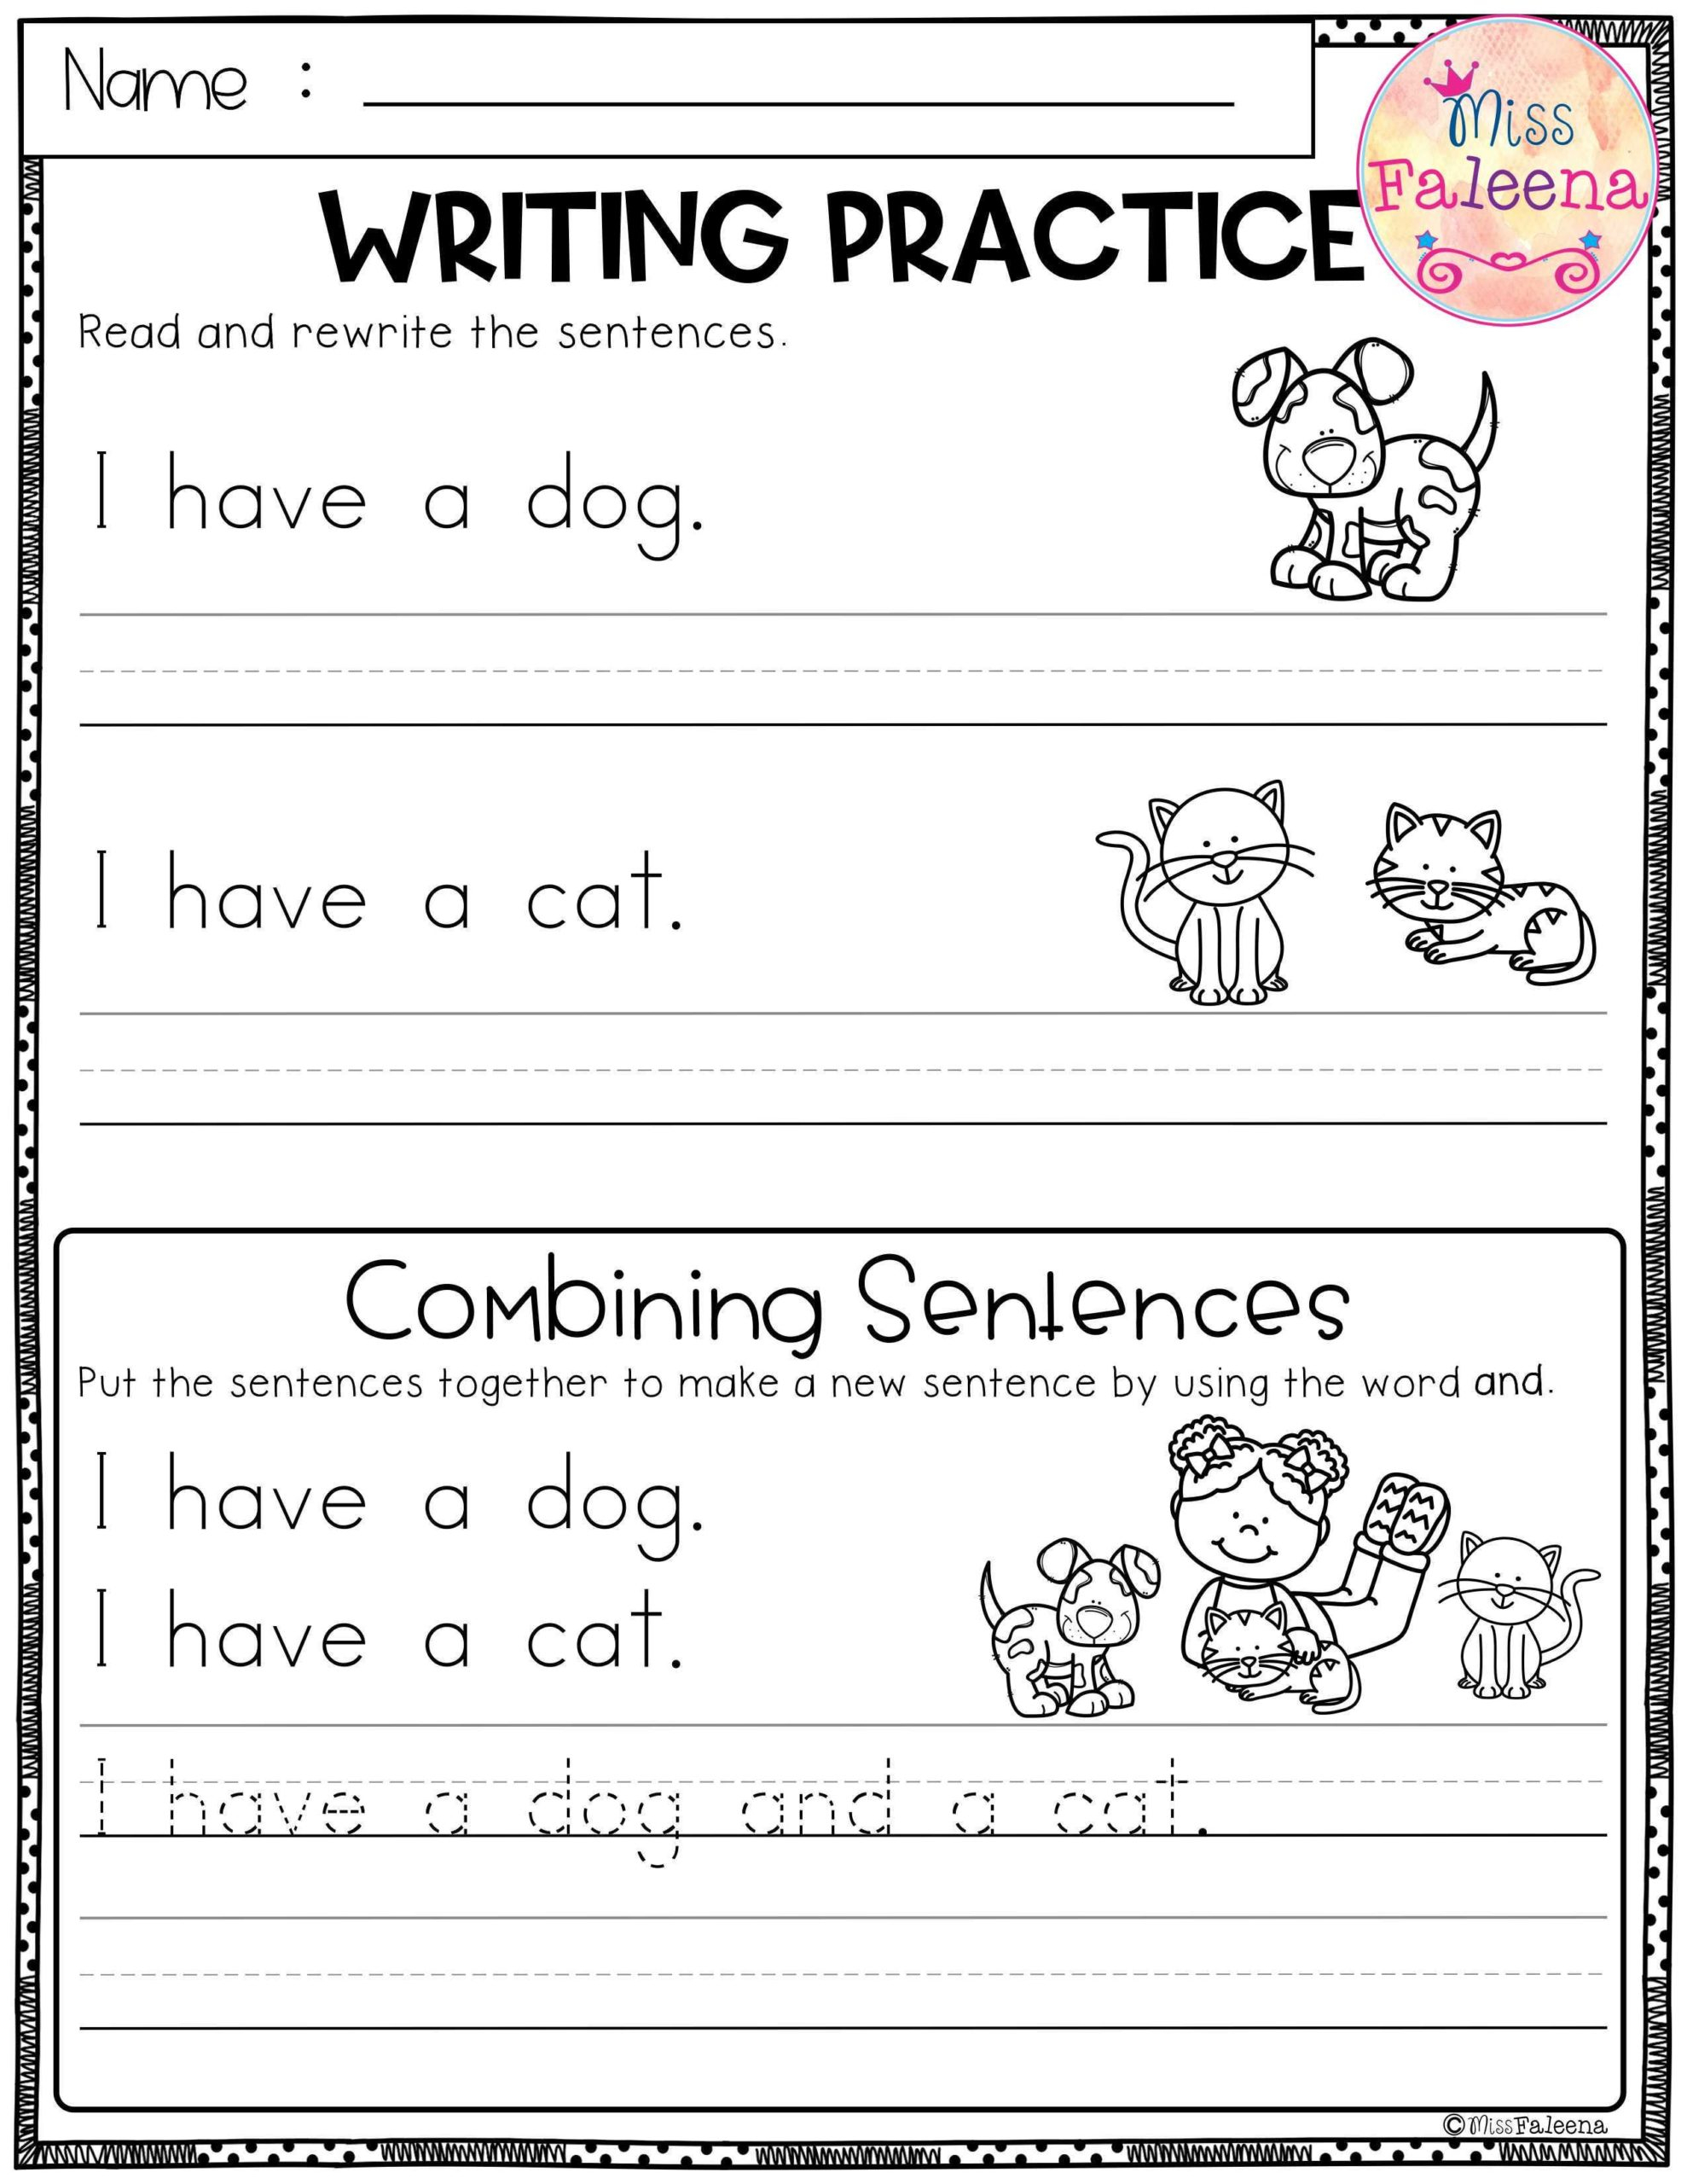 Free Writing Practice Combining Sentences Sentence